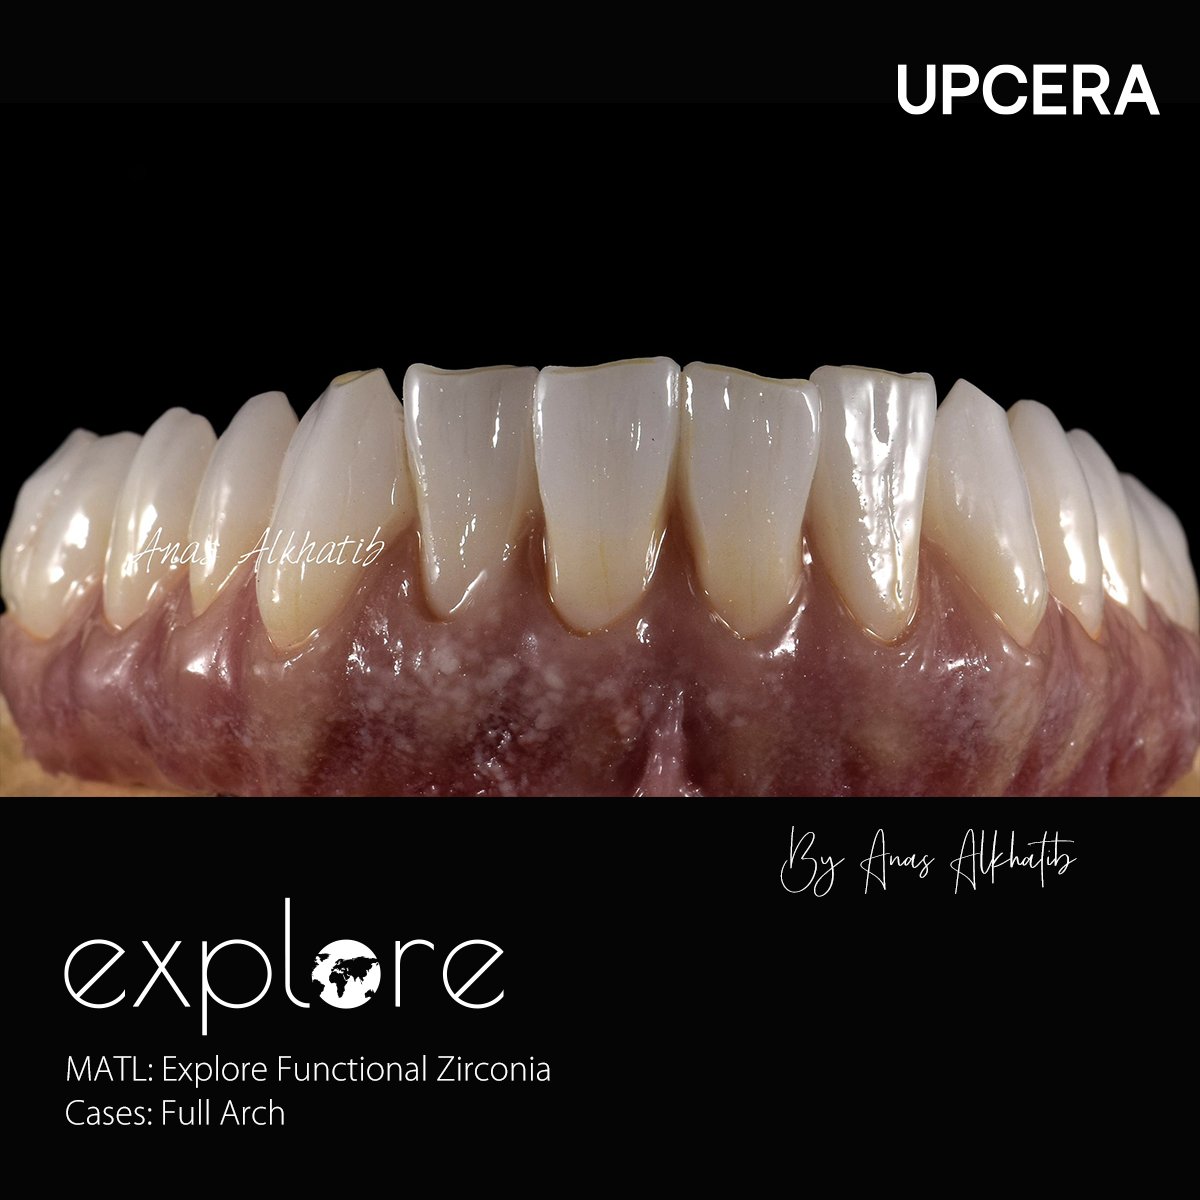 UPCERA_Dental tweet picture